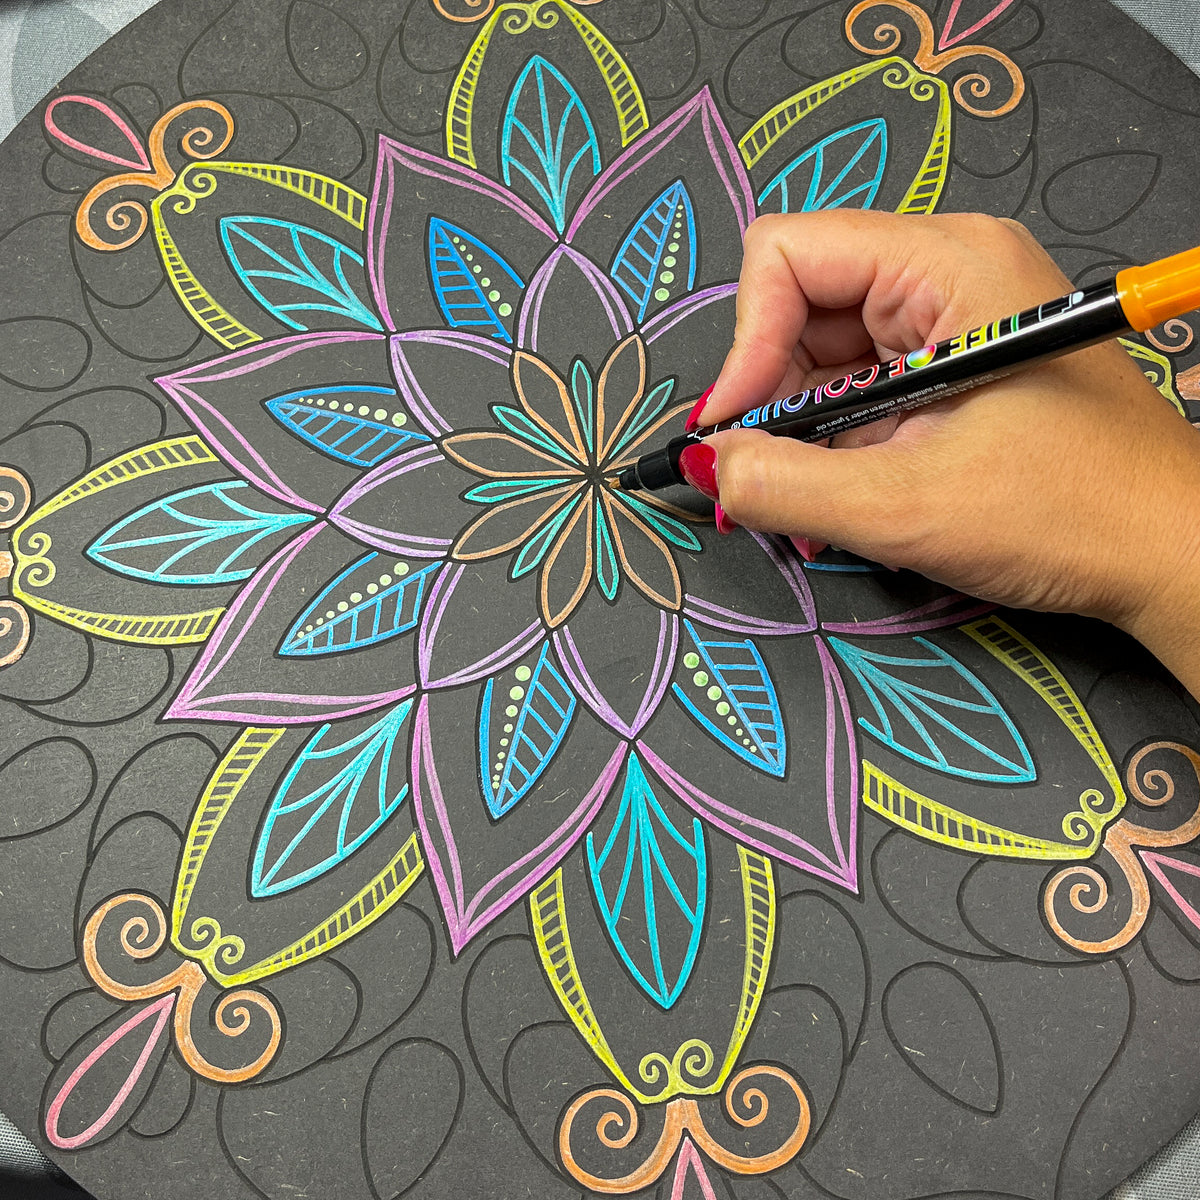 Life of Colour Mandala Galaxy Painting Kit - Sun